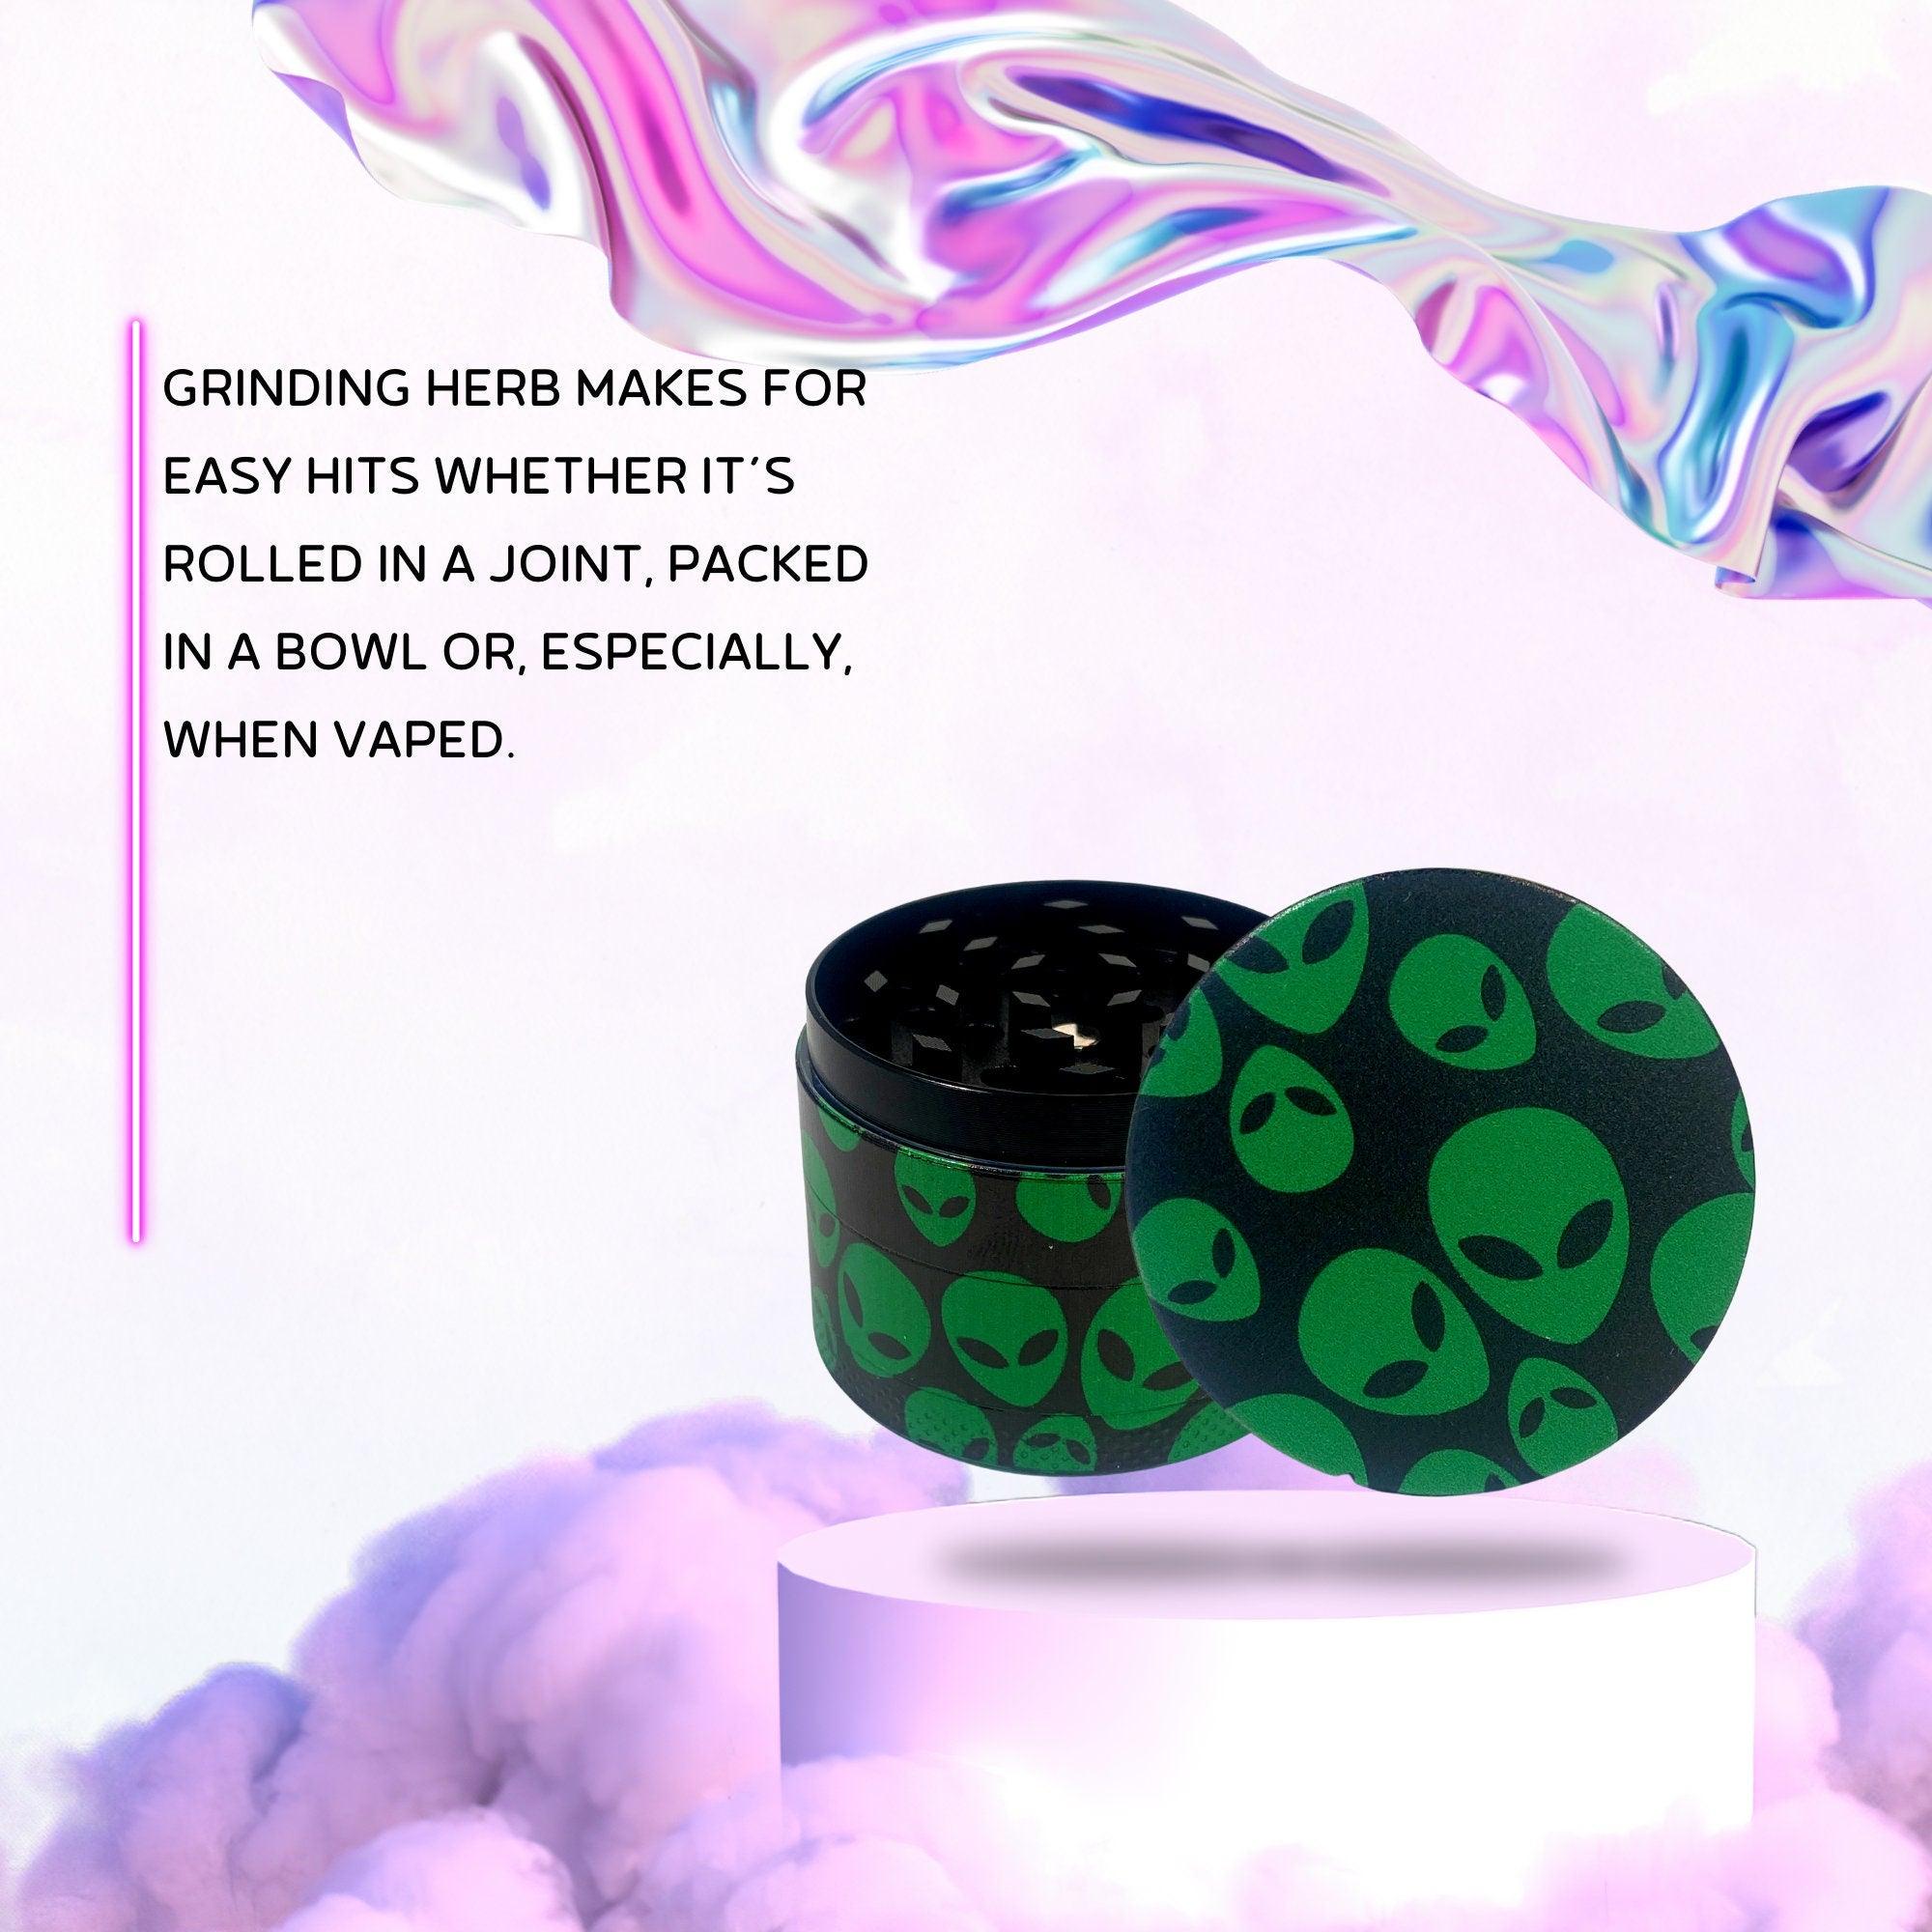 Alien Weed Grinder | Funny cannabis grinders, weed accessories, 4 piece grinder, metal grinder, cannabis, Space Psychedelic Trippy Girly Man